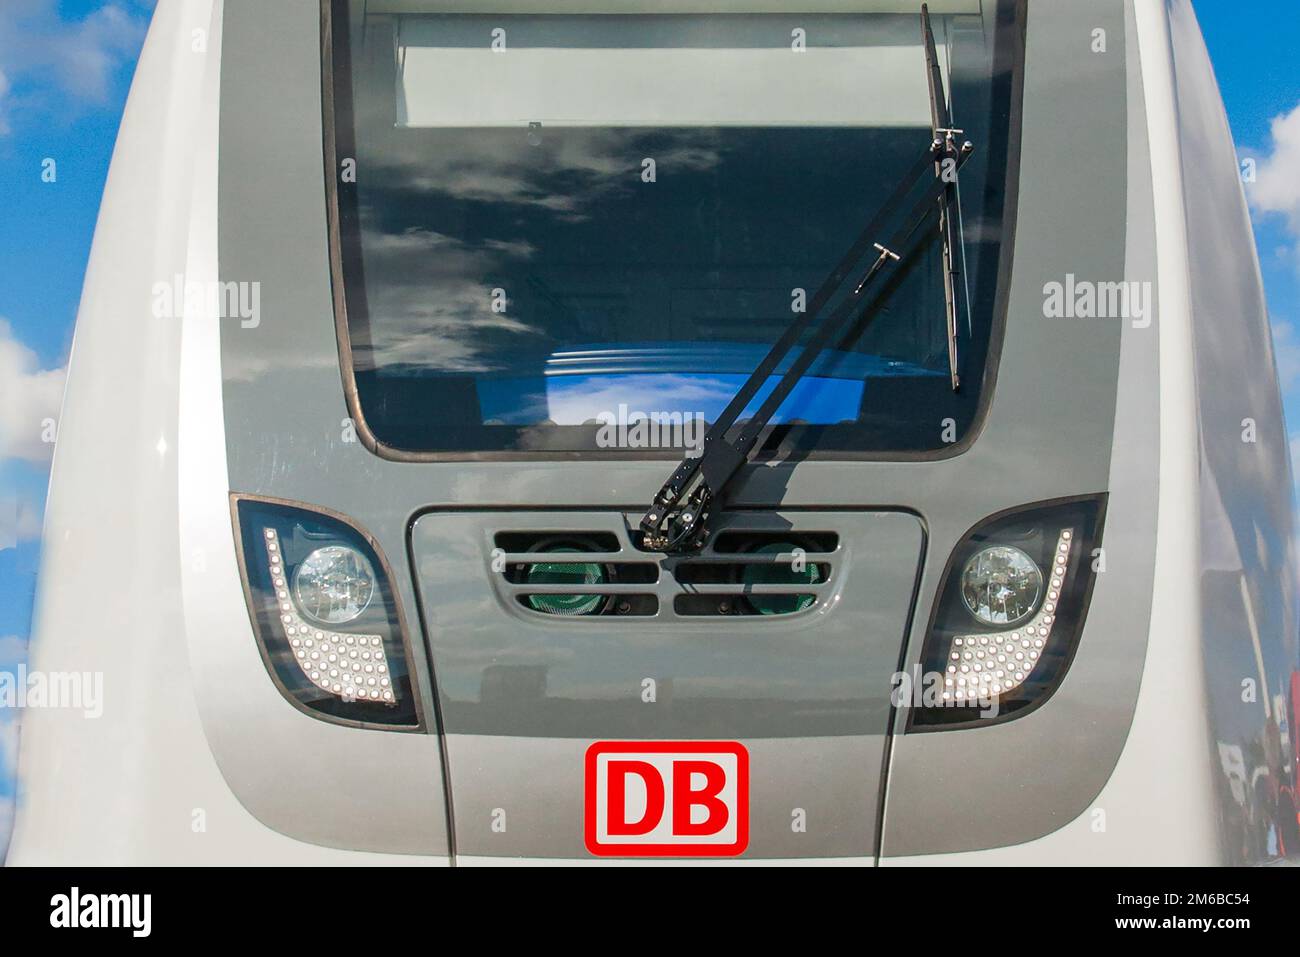 Intercity-2-Train of Deutsche Bahn Stock Photo